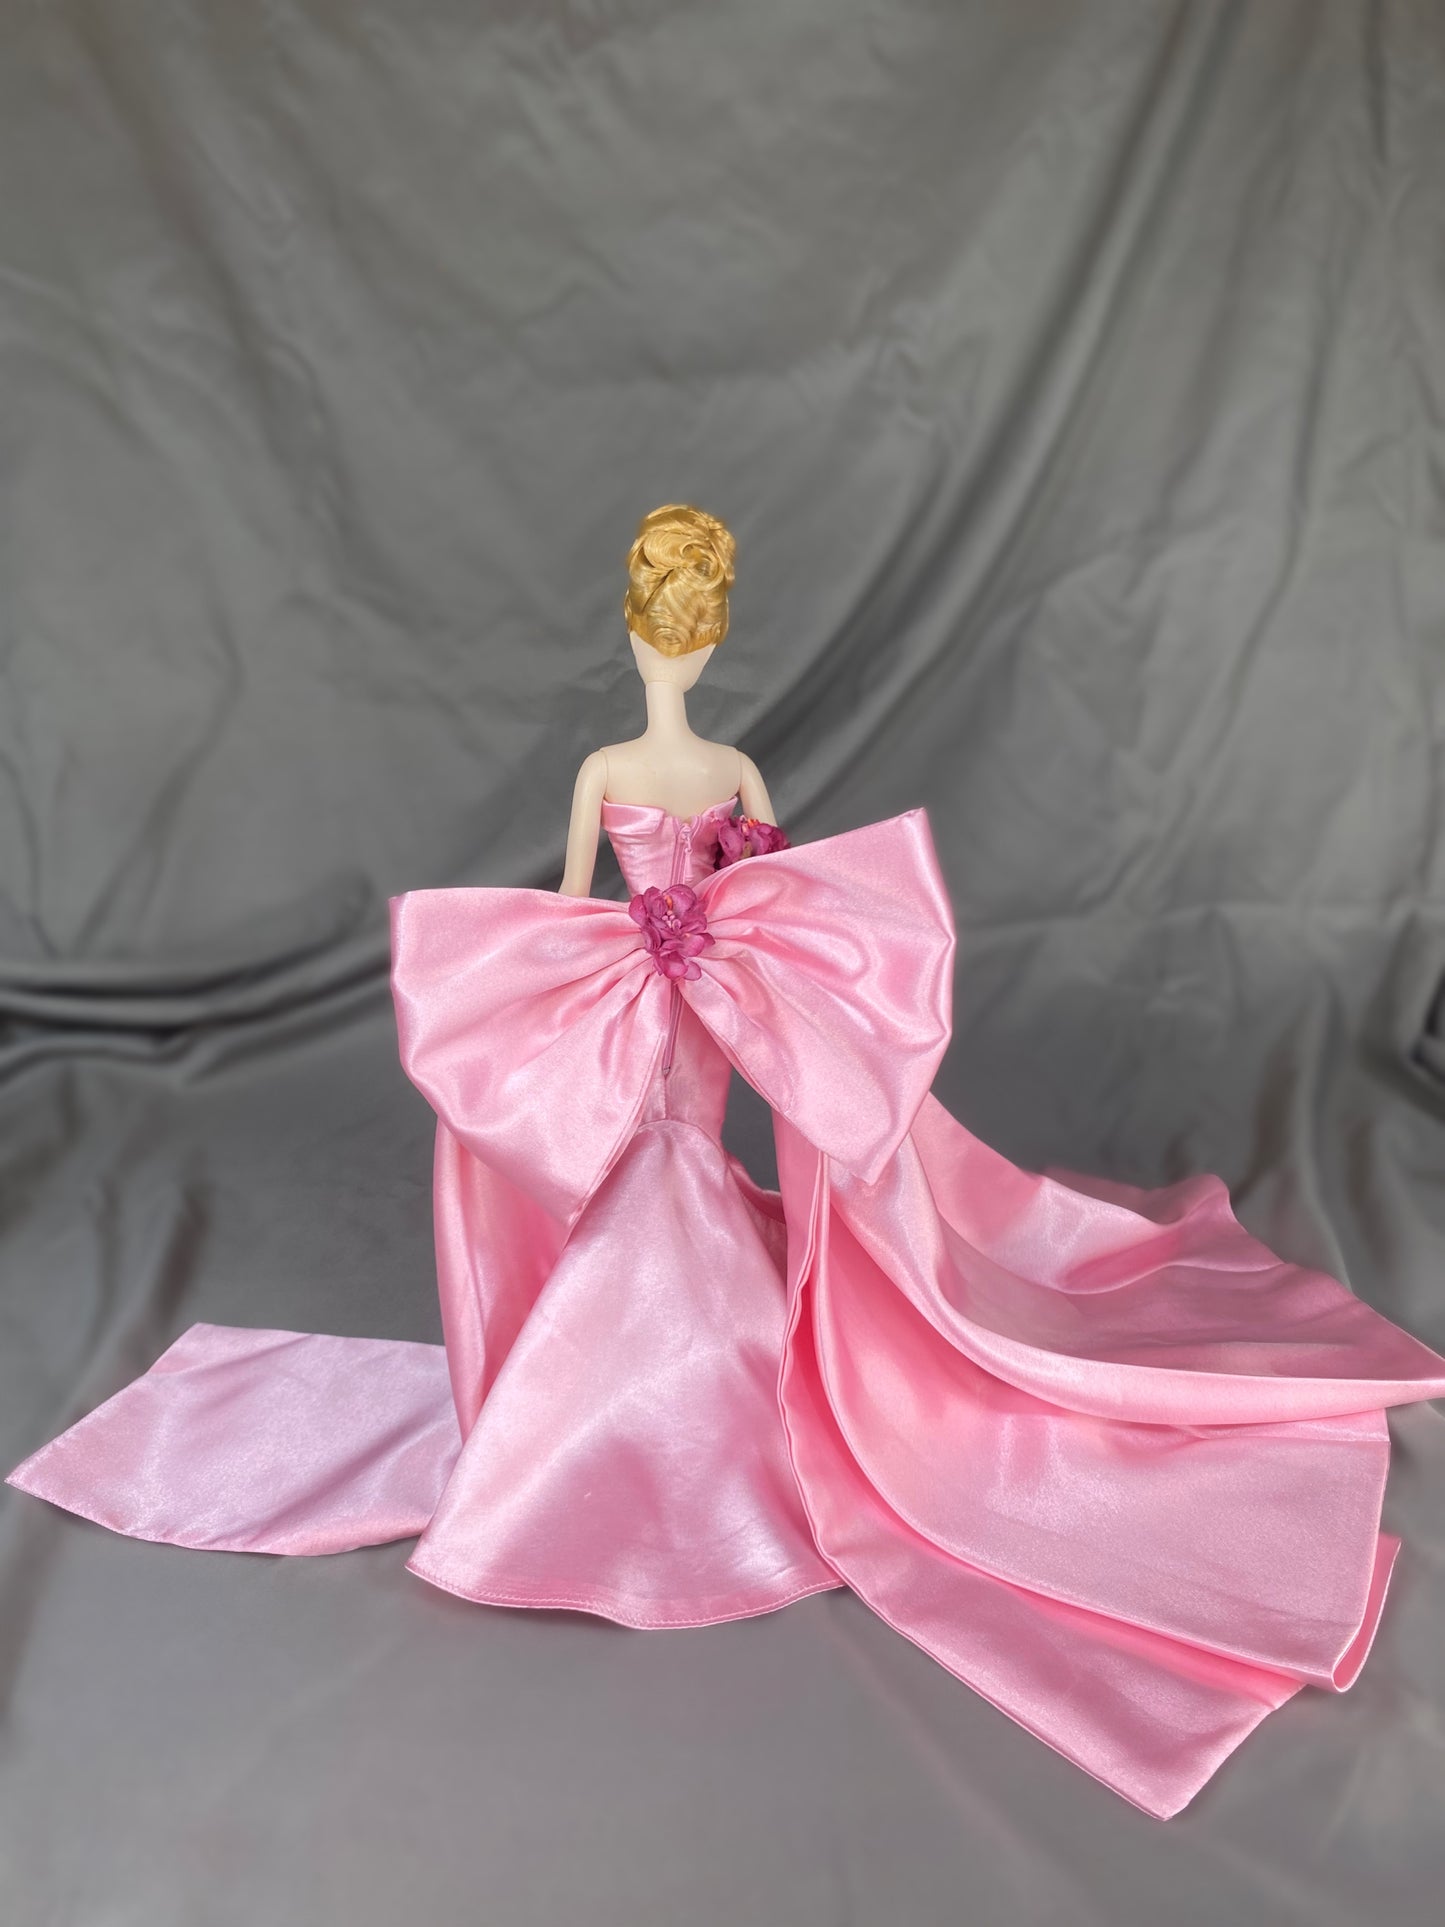 Pink Delphine Gown Handmade for Silkstone Barbie Fashion Model Doll Poppy Parker